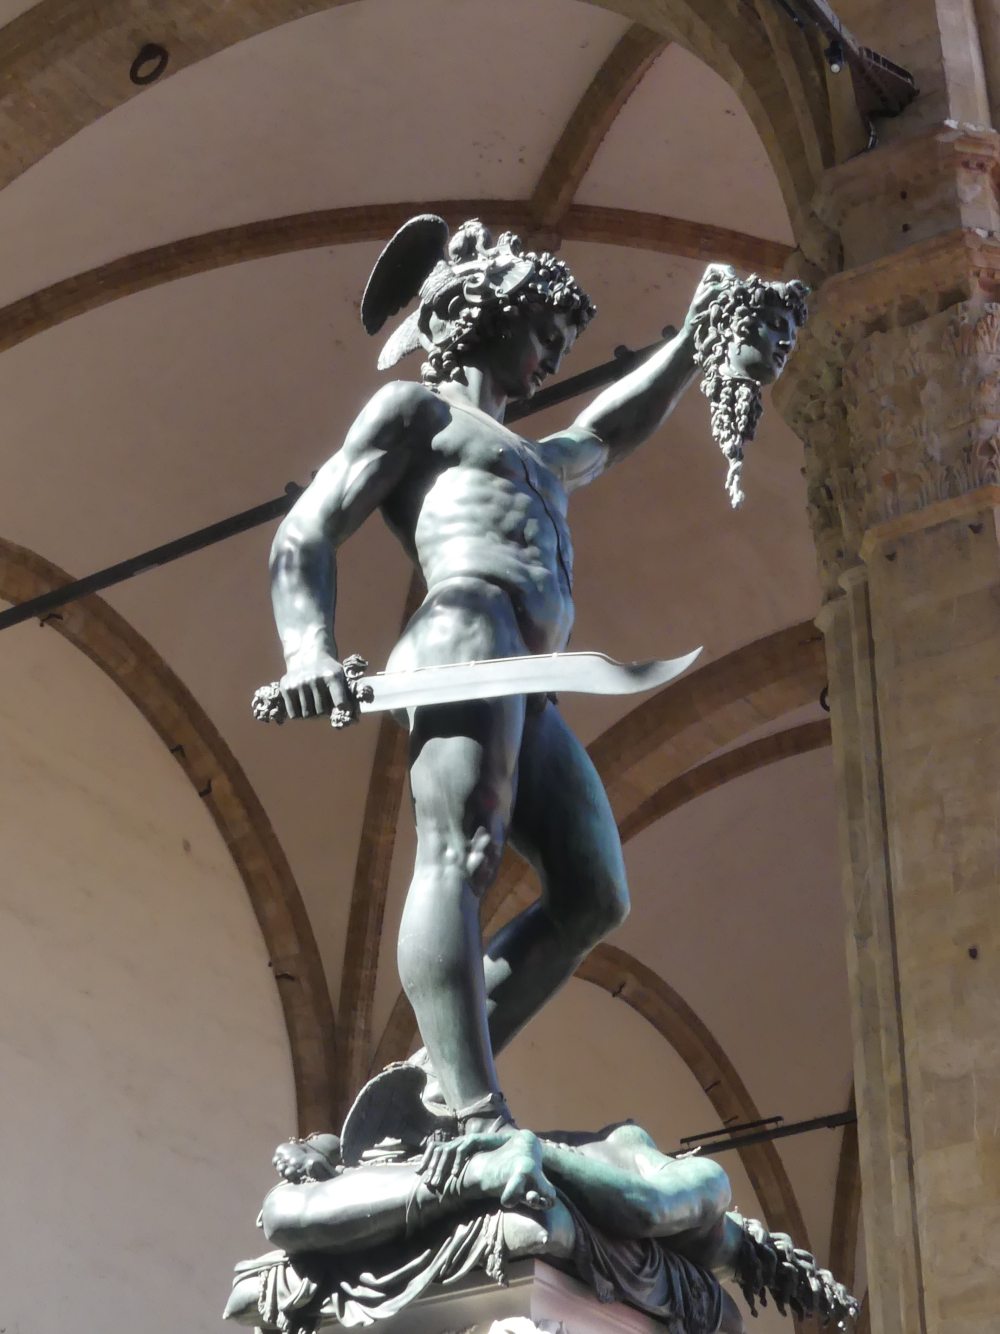 Bronzestatue hält abgeschlagenen Kopf hoch.